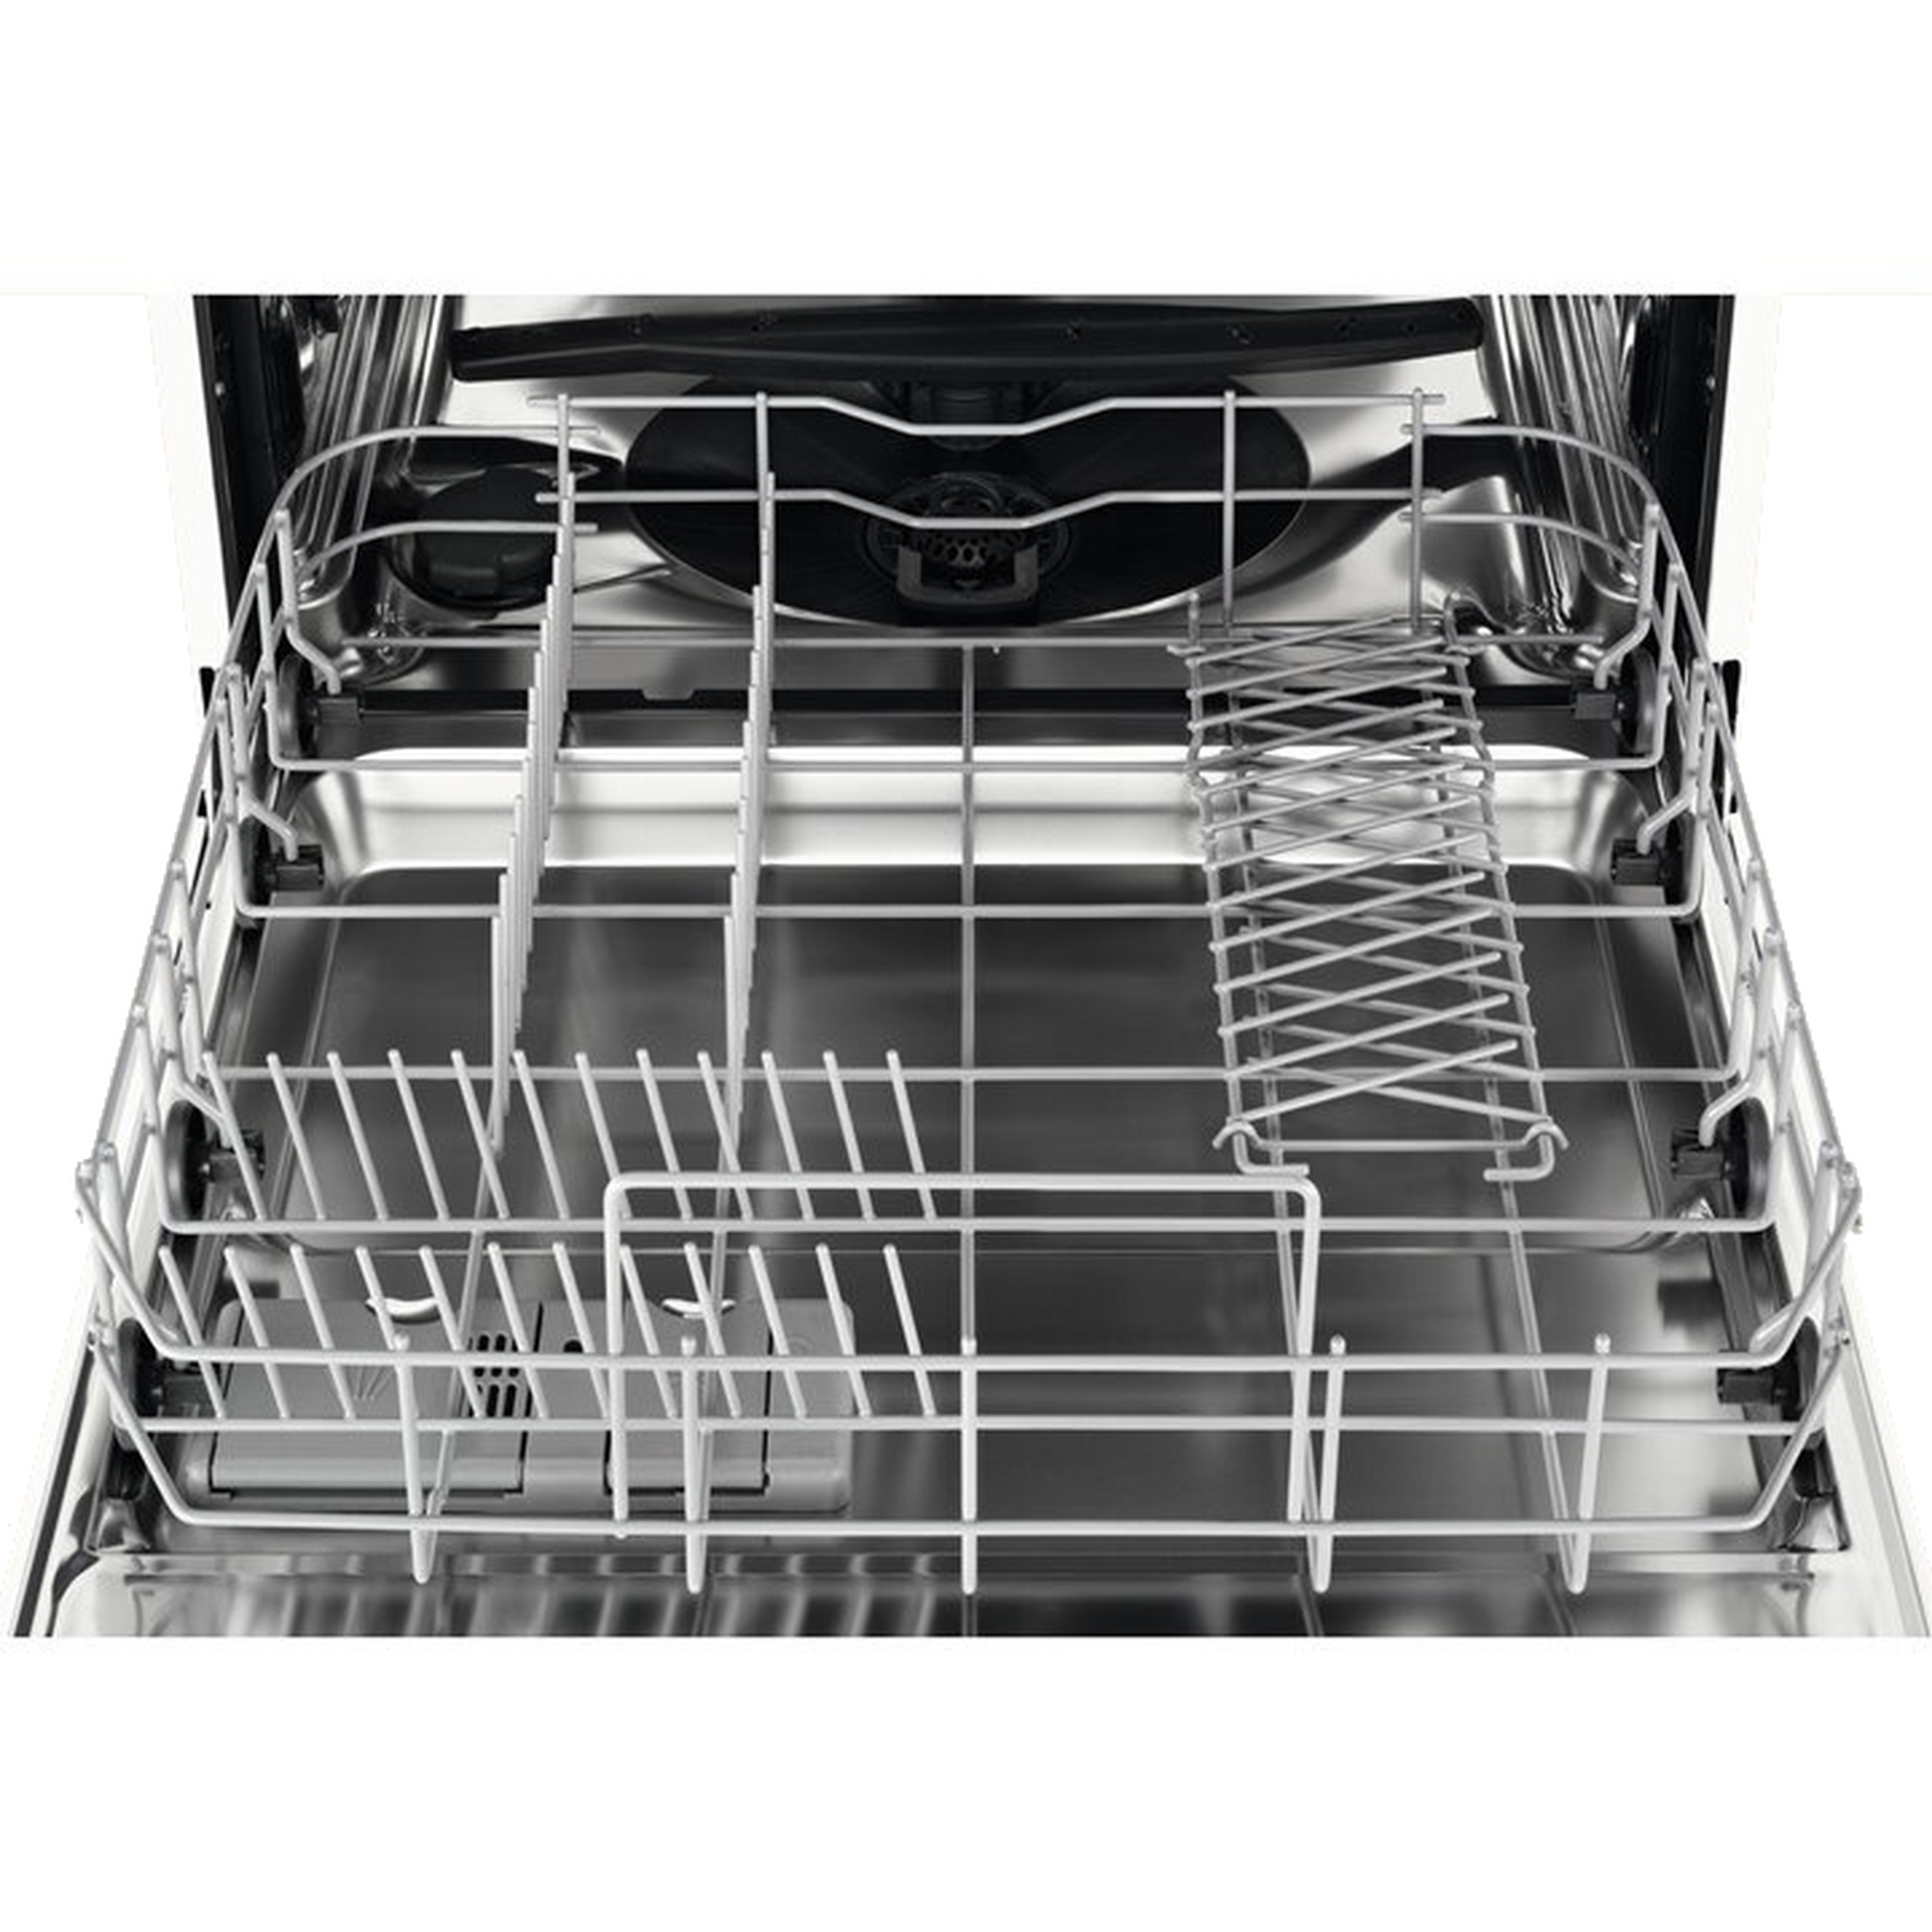 Electrolux 6 Program Free-standing Dishwasher (ESF5513LOX) - Stainless Steel